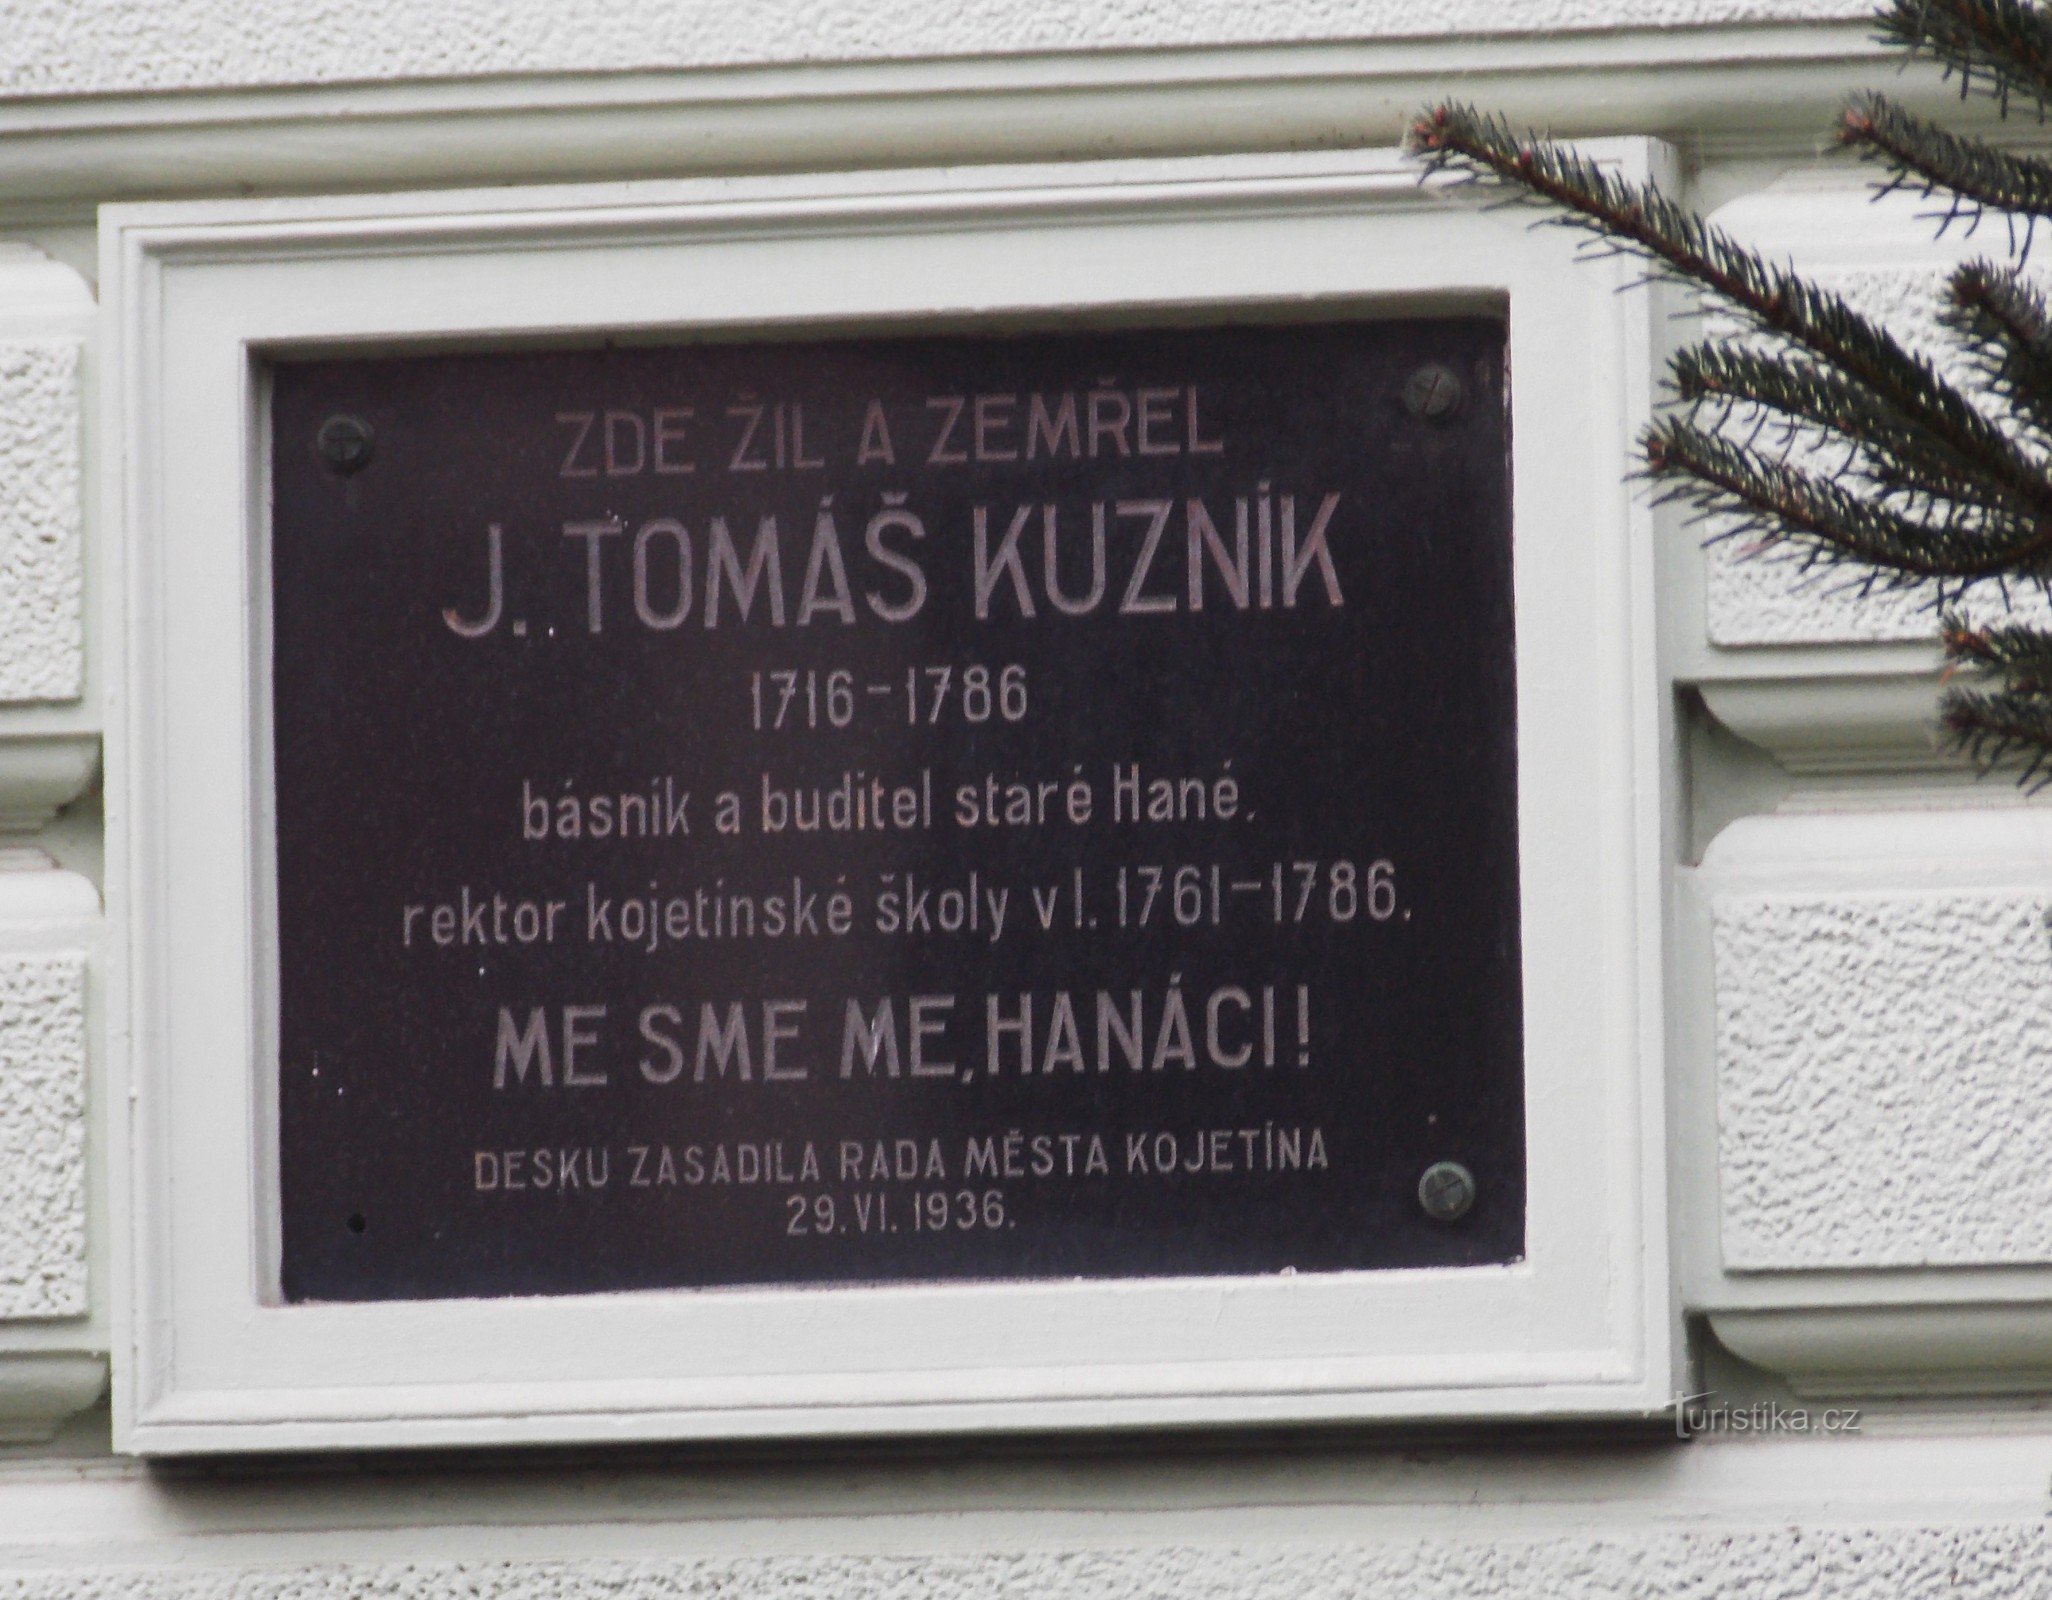 The oldest elementary school St. Bohemia in Kojetín